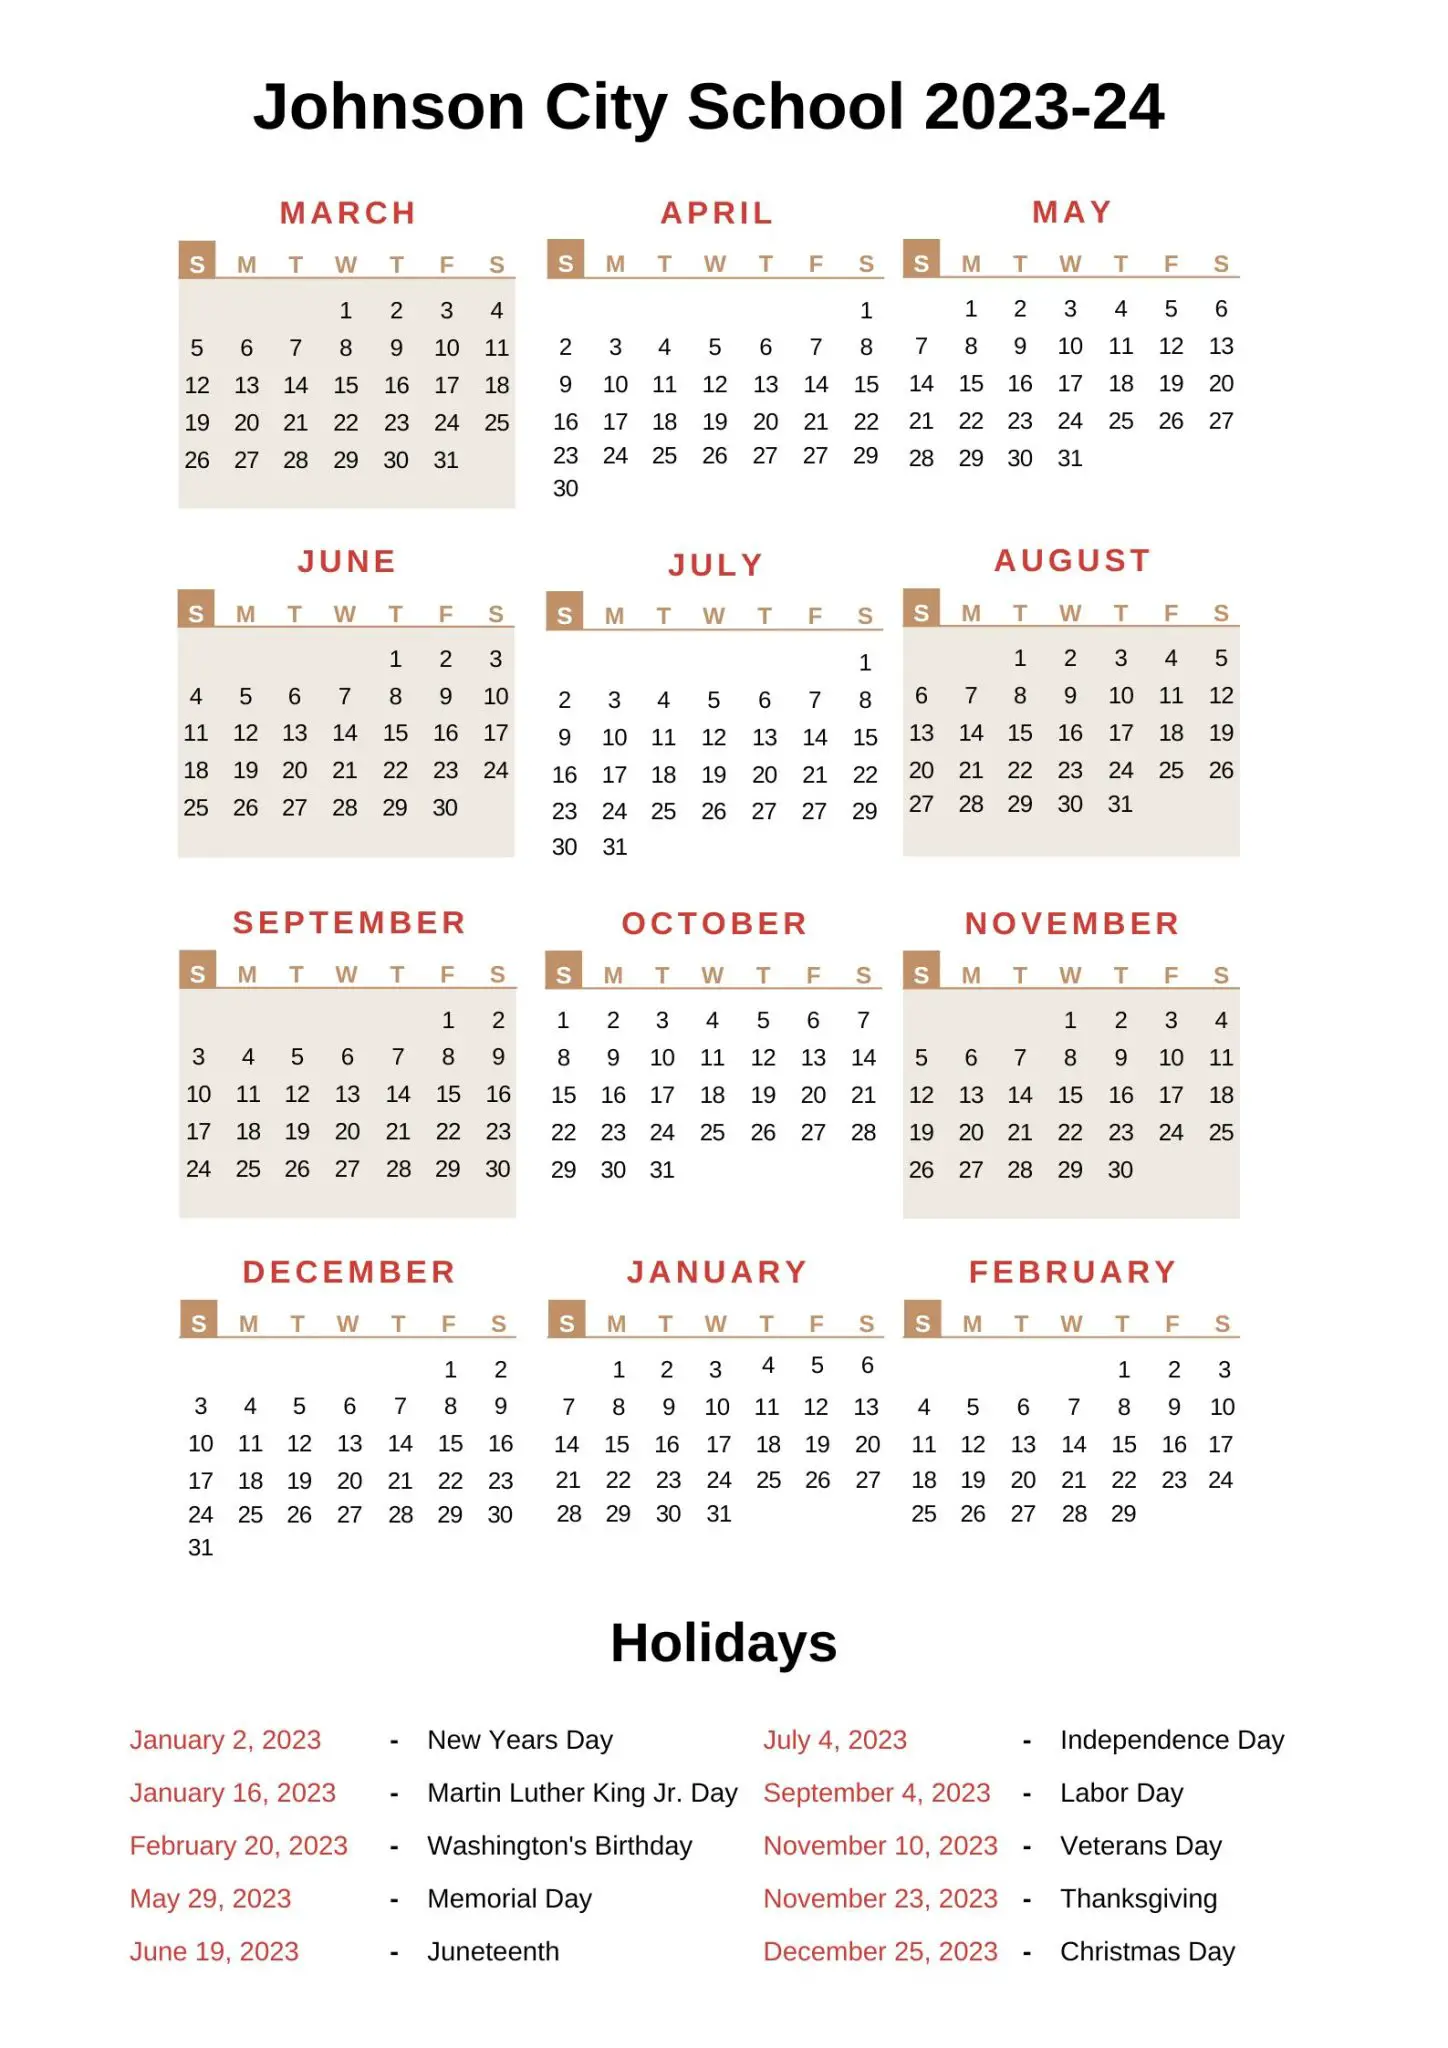 Johnson City Schools Calendar JCS 2023 24 with Holidays